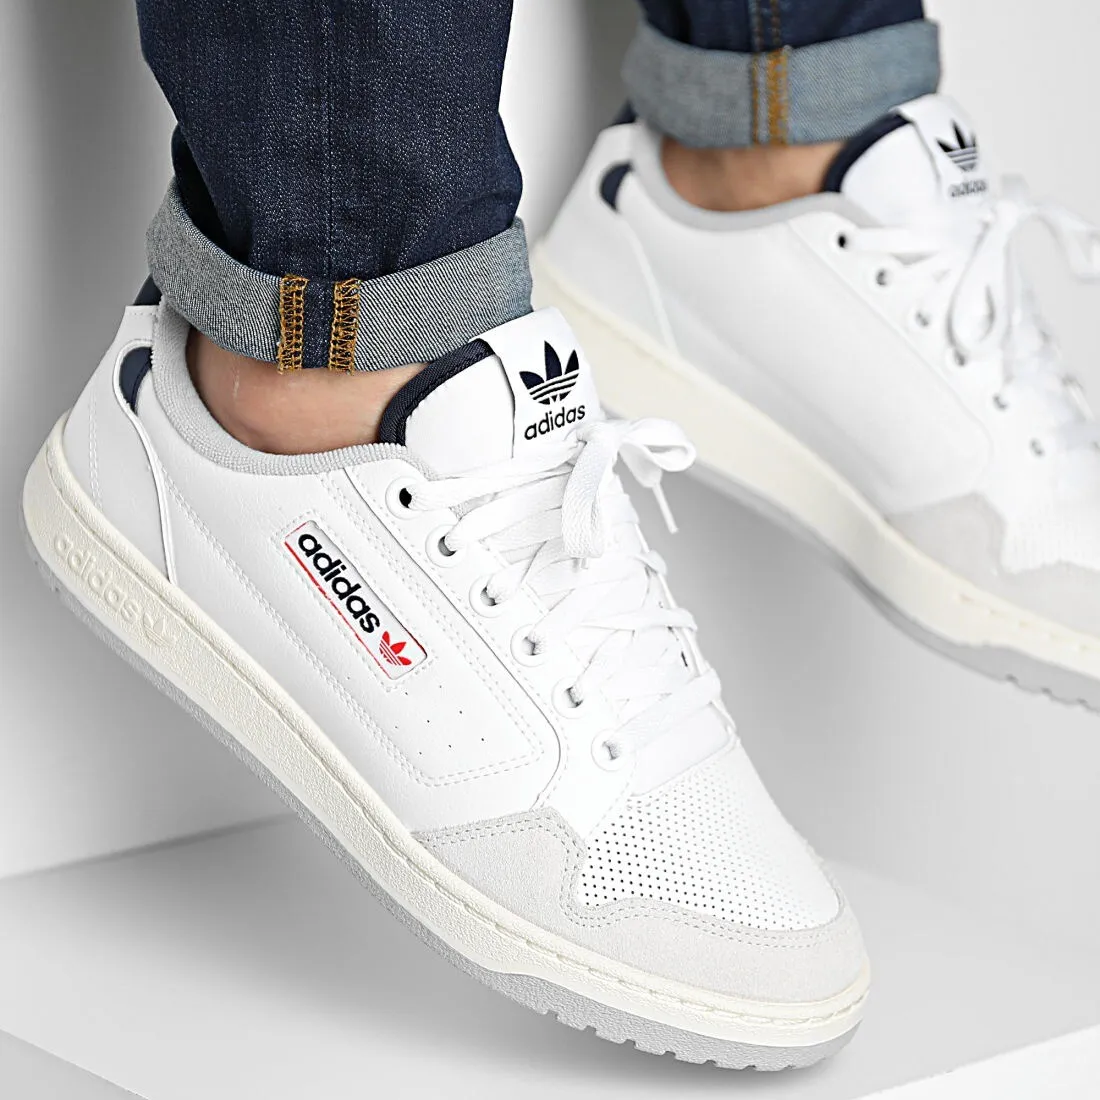 Adidas NY 90 Footwear White Legend Ink Mens Shoes new sneaker Sz 8-12 | eBay